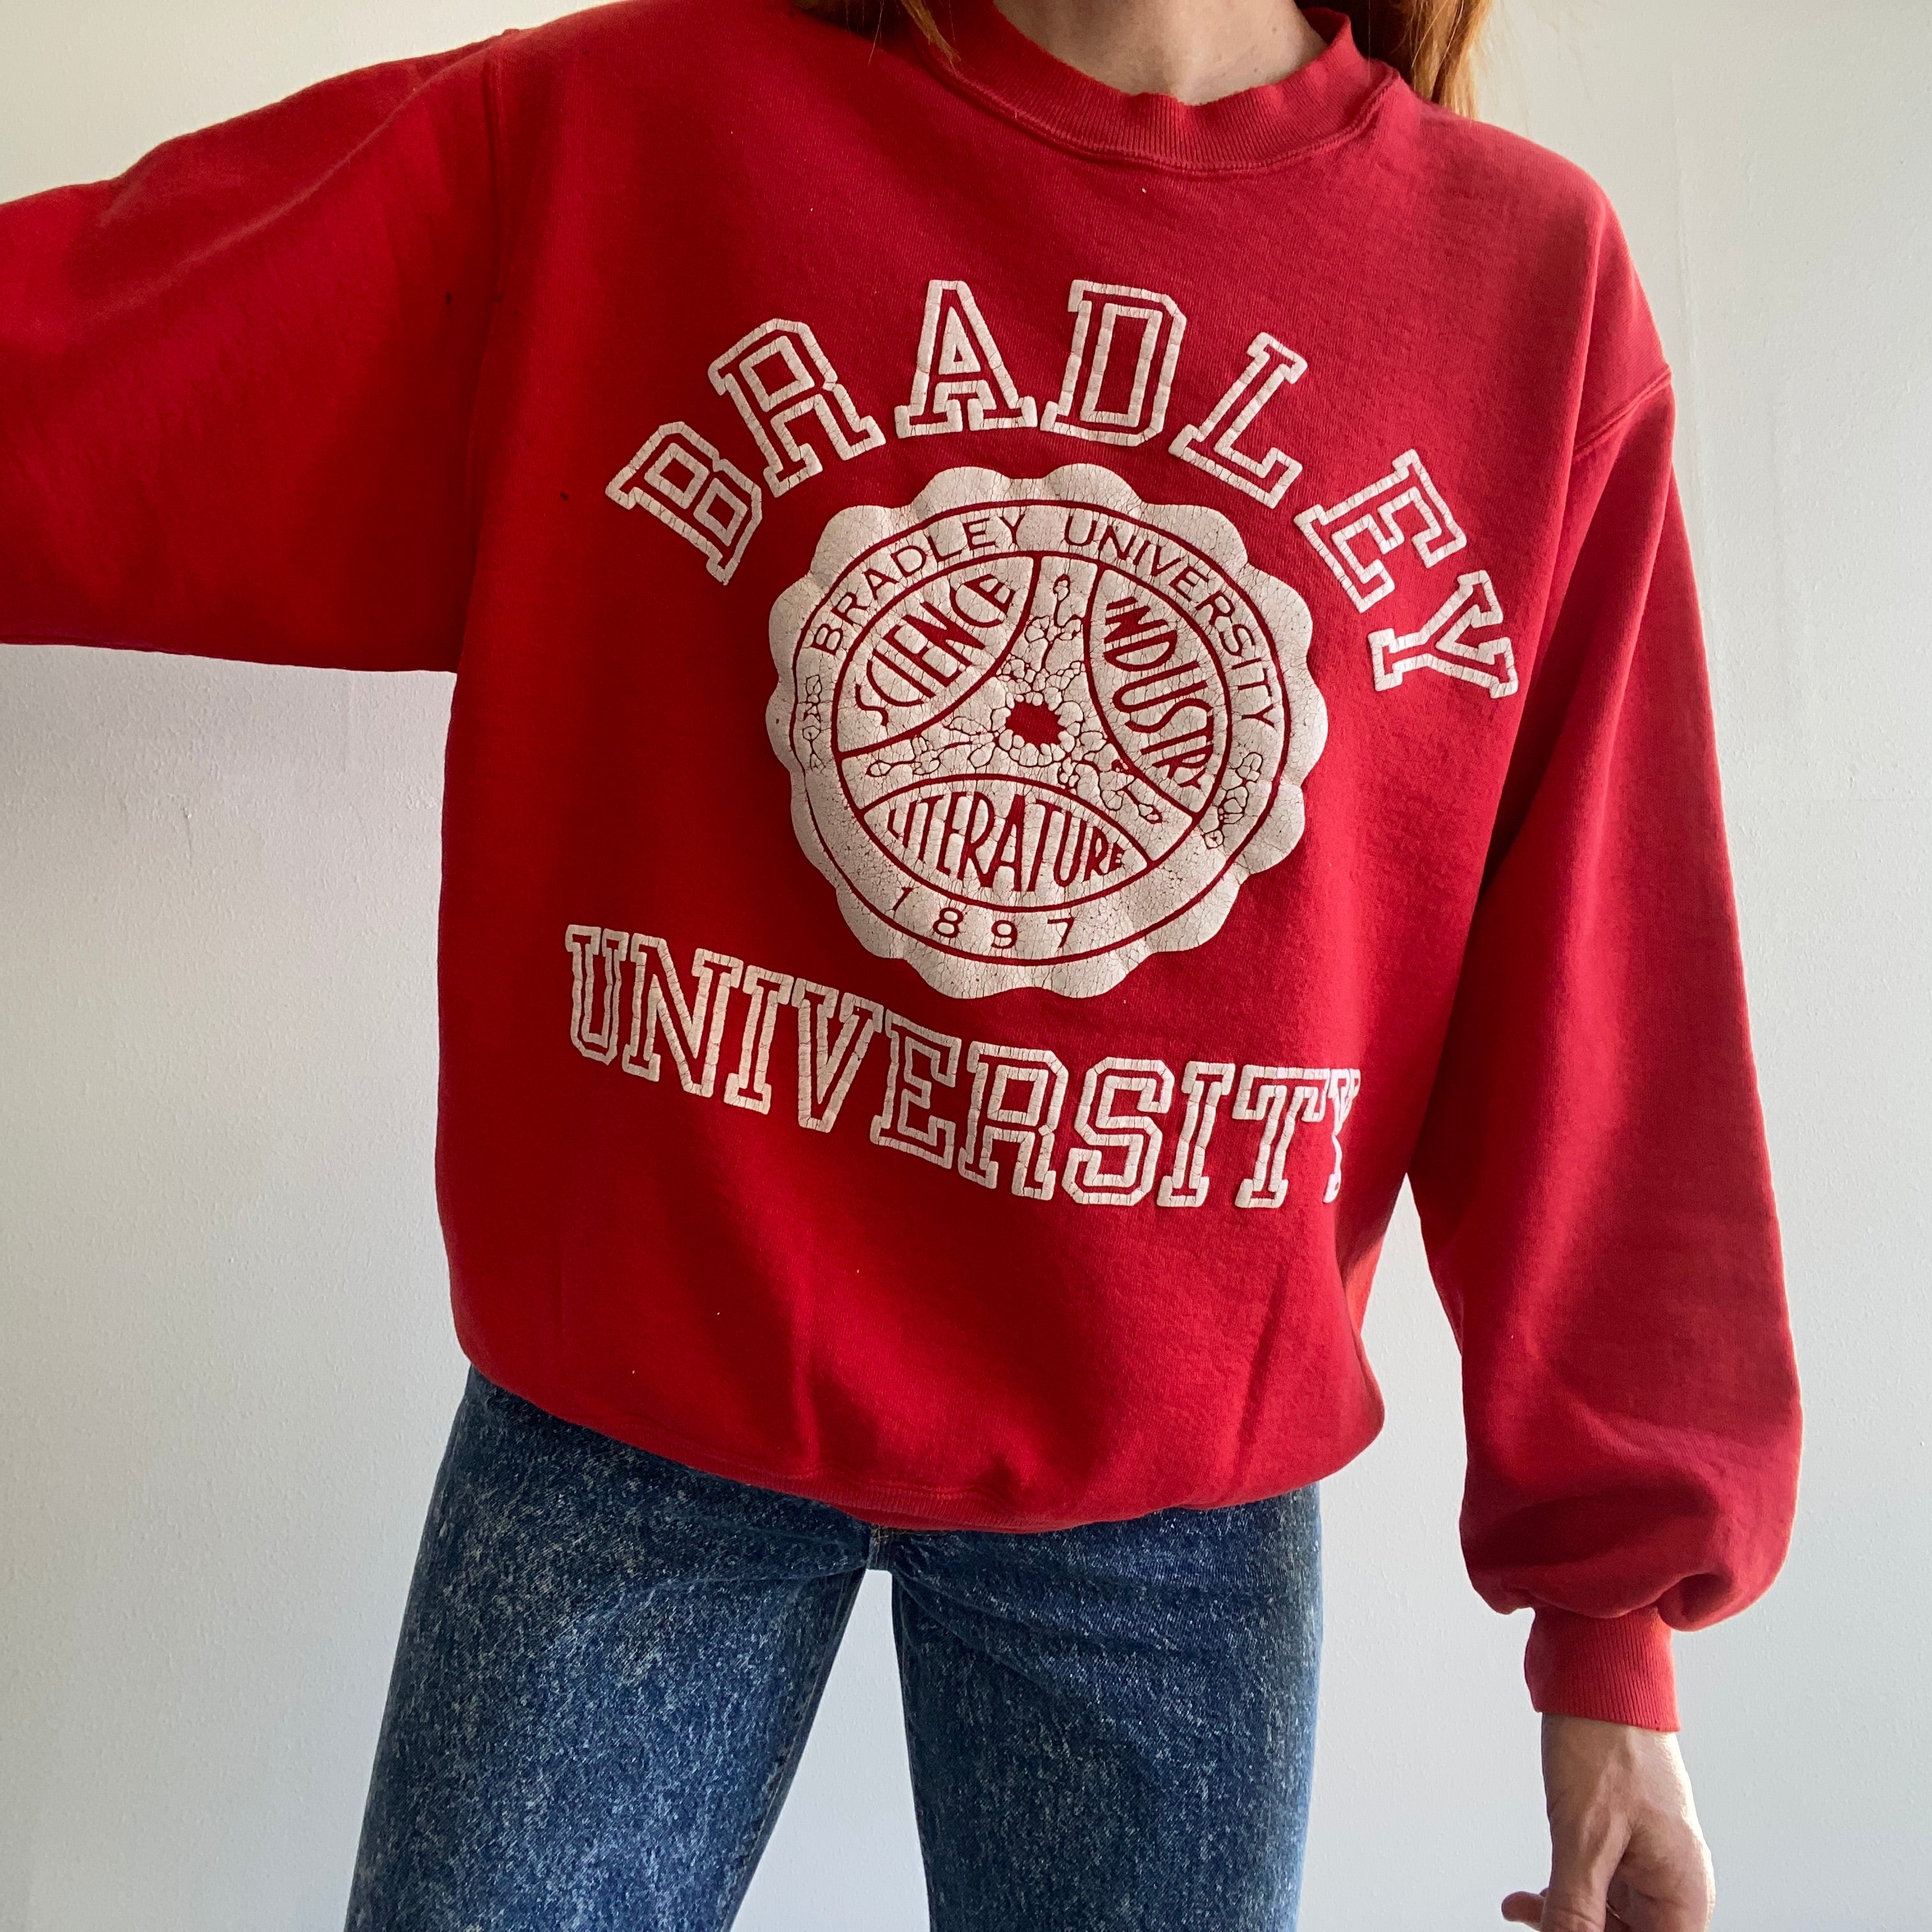 1980s RAD Bradley University Sweatshirt by Jansport